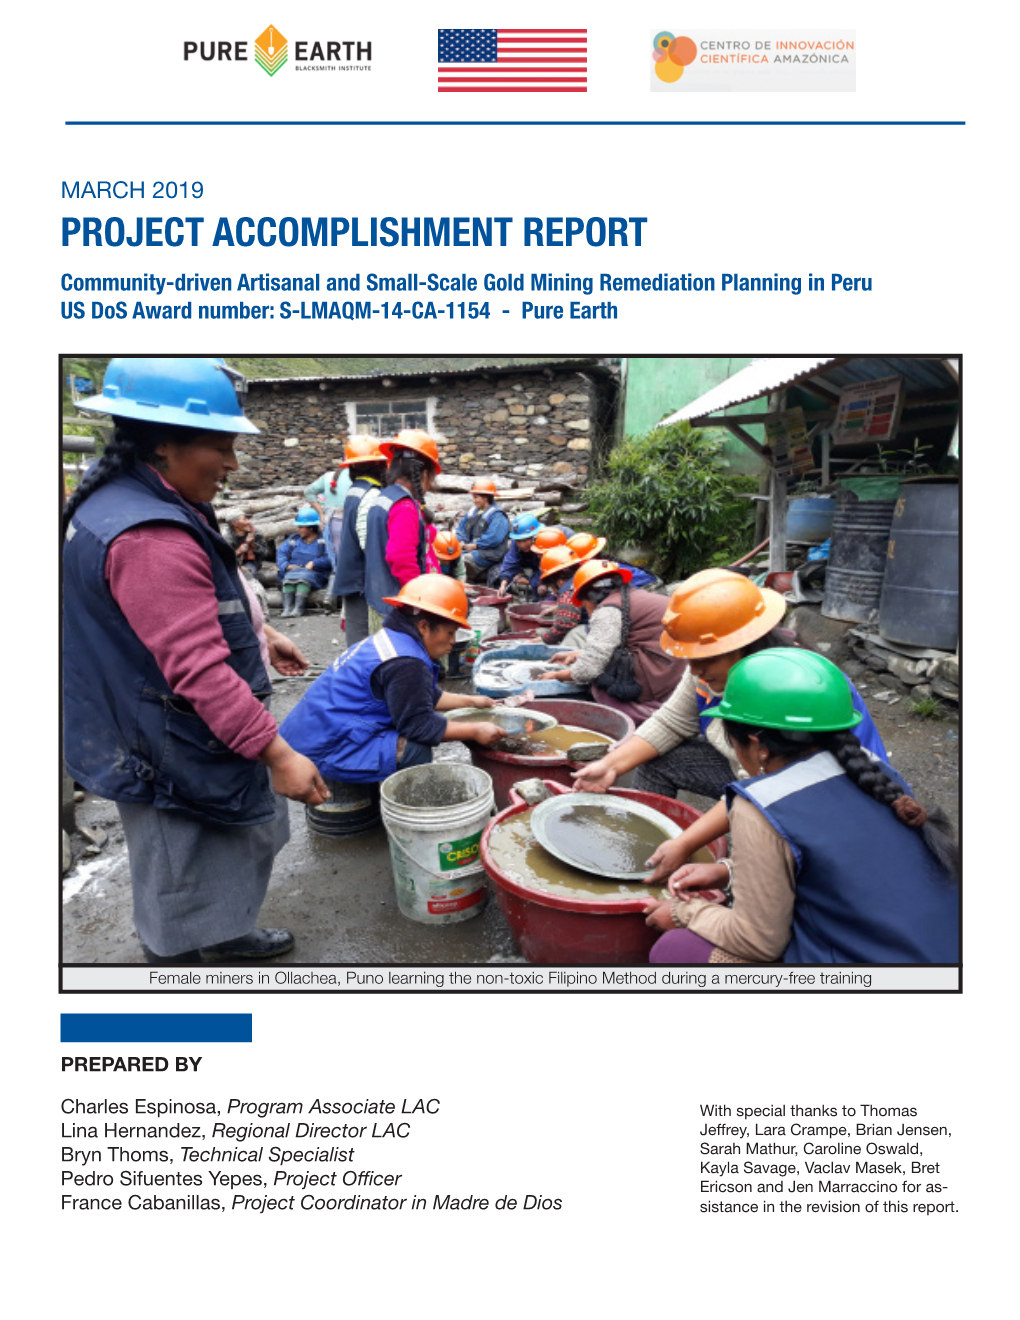 Project Accomplishment Report